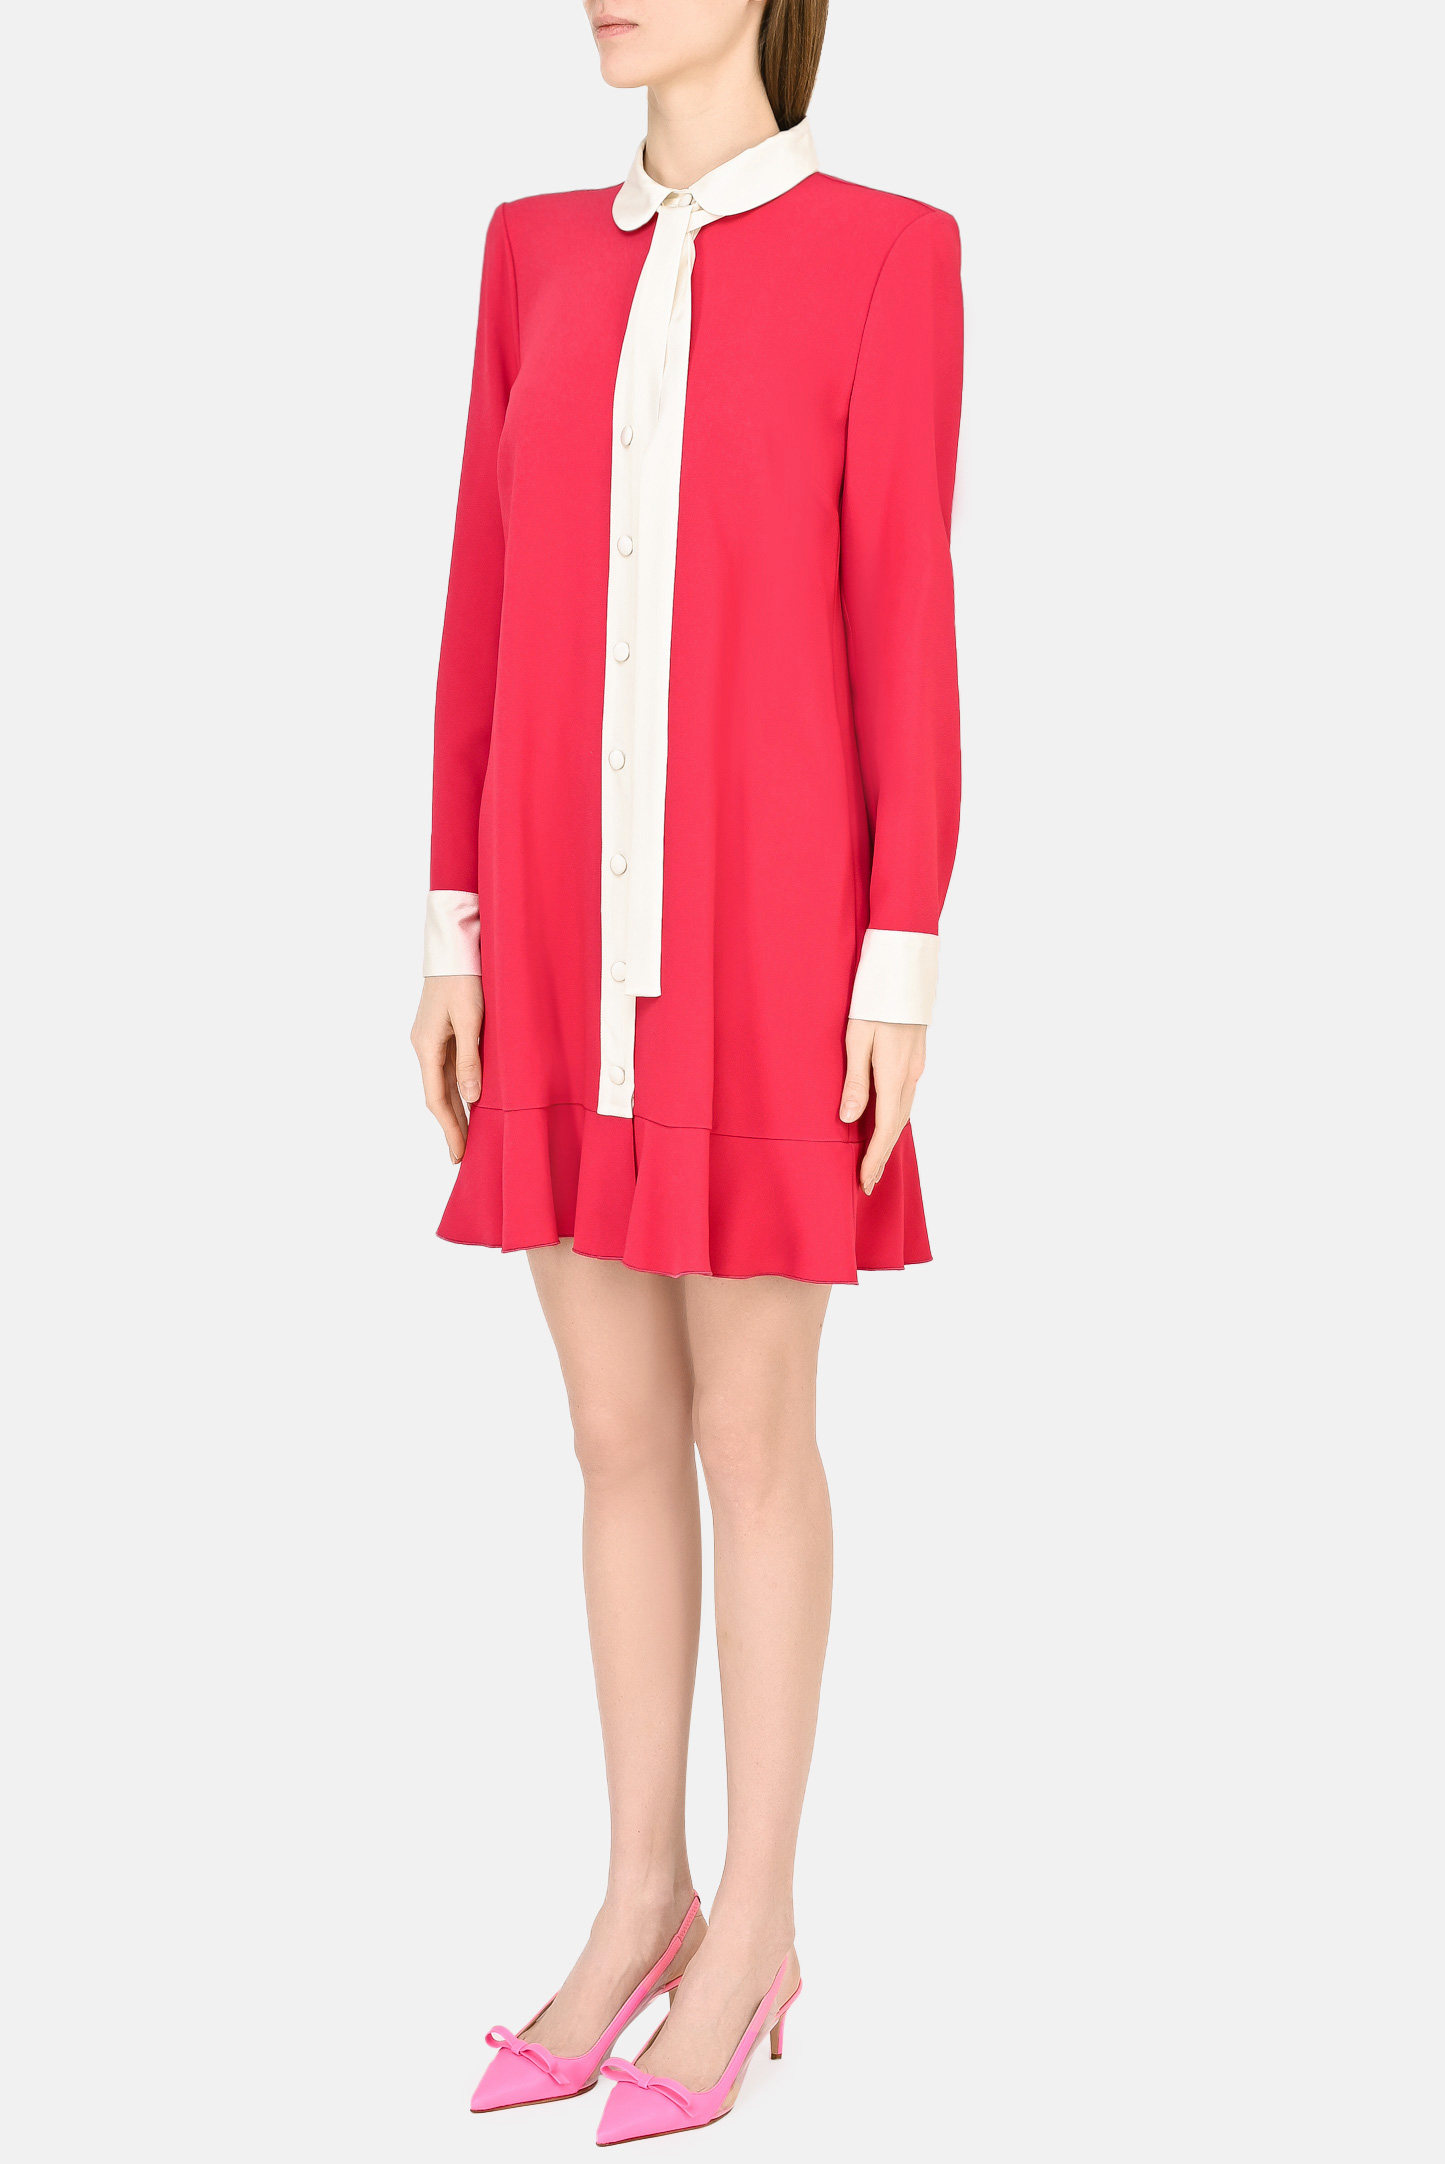 Платье RED VALENTINO XR3VADA53TG, цвет: Розовый, Женский